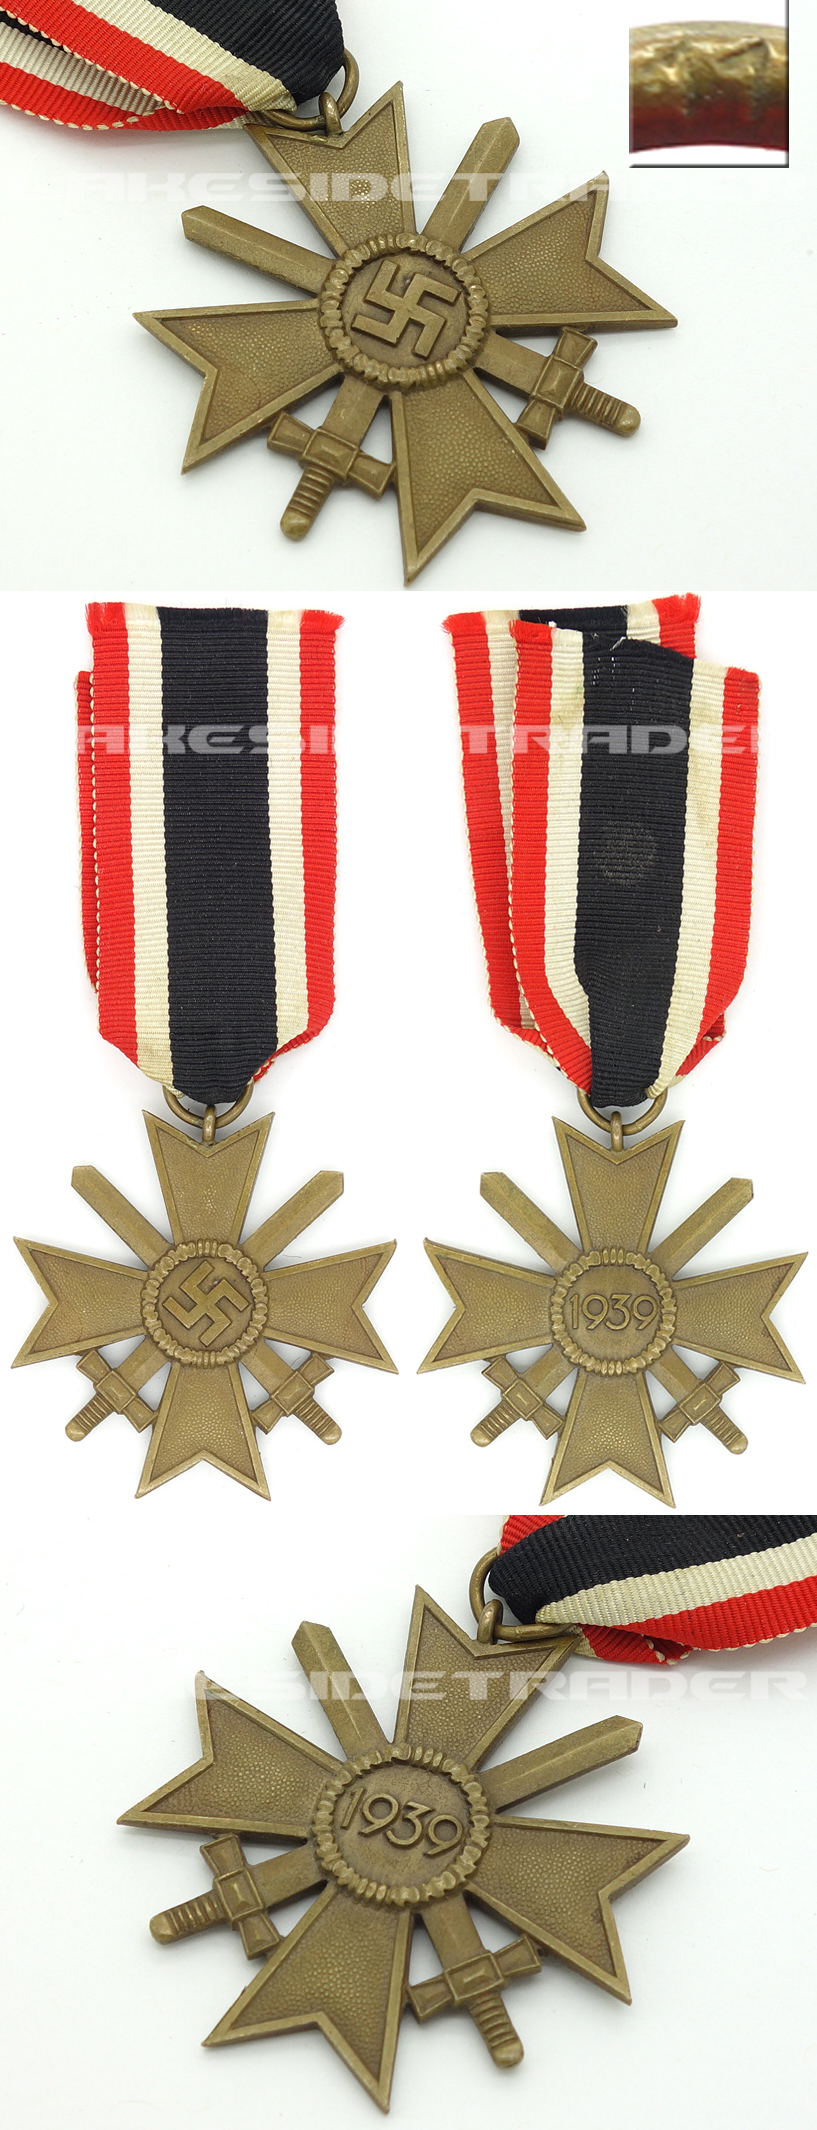 2nd Class War Merit Cross with Swords by 11